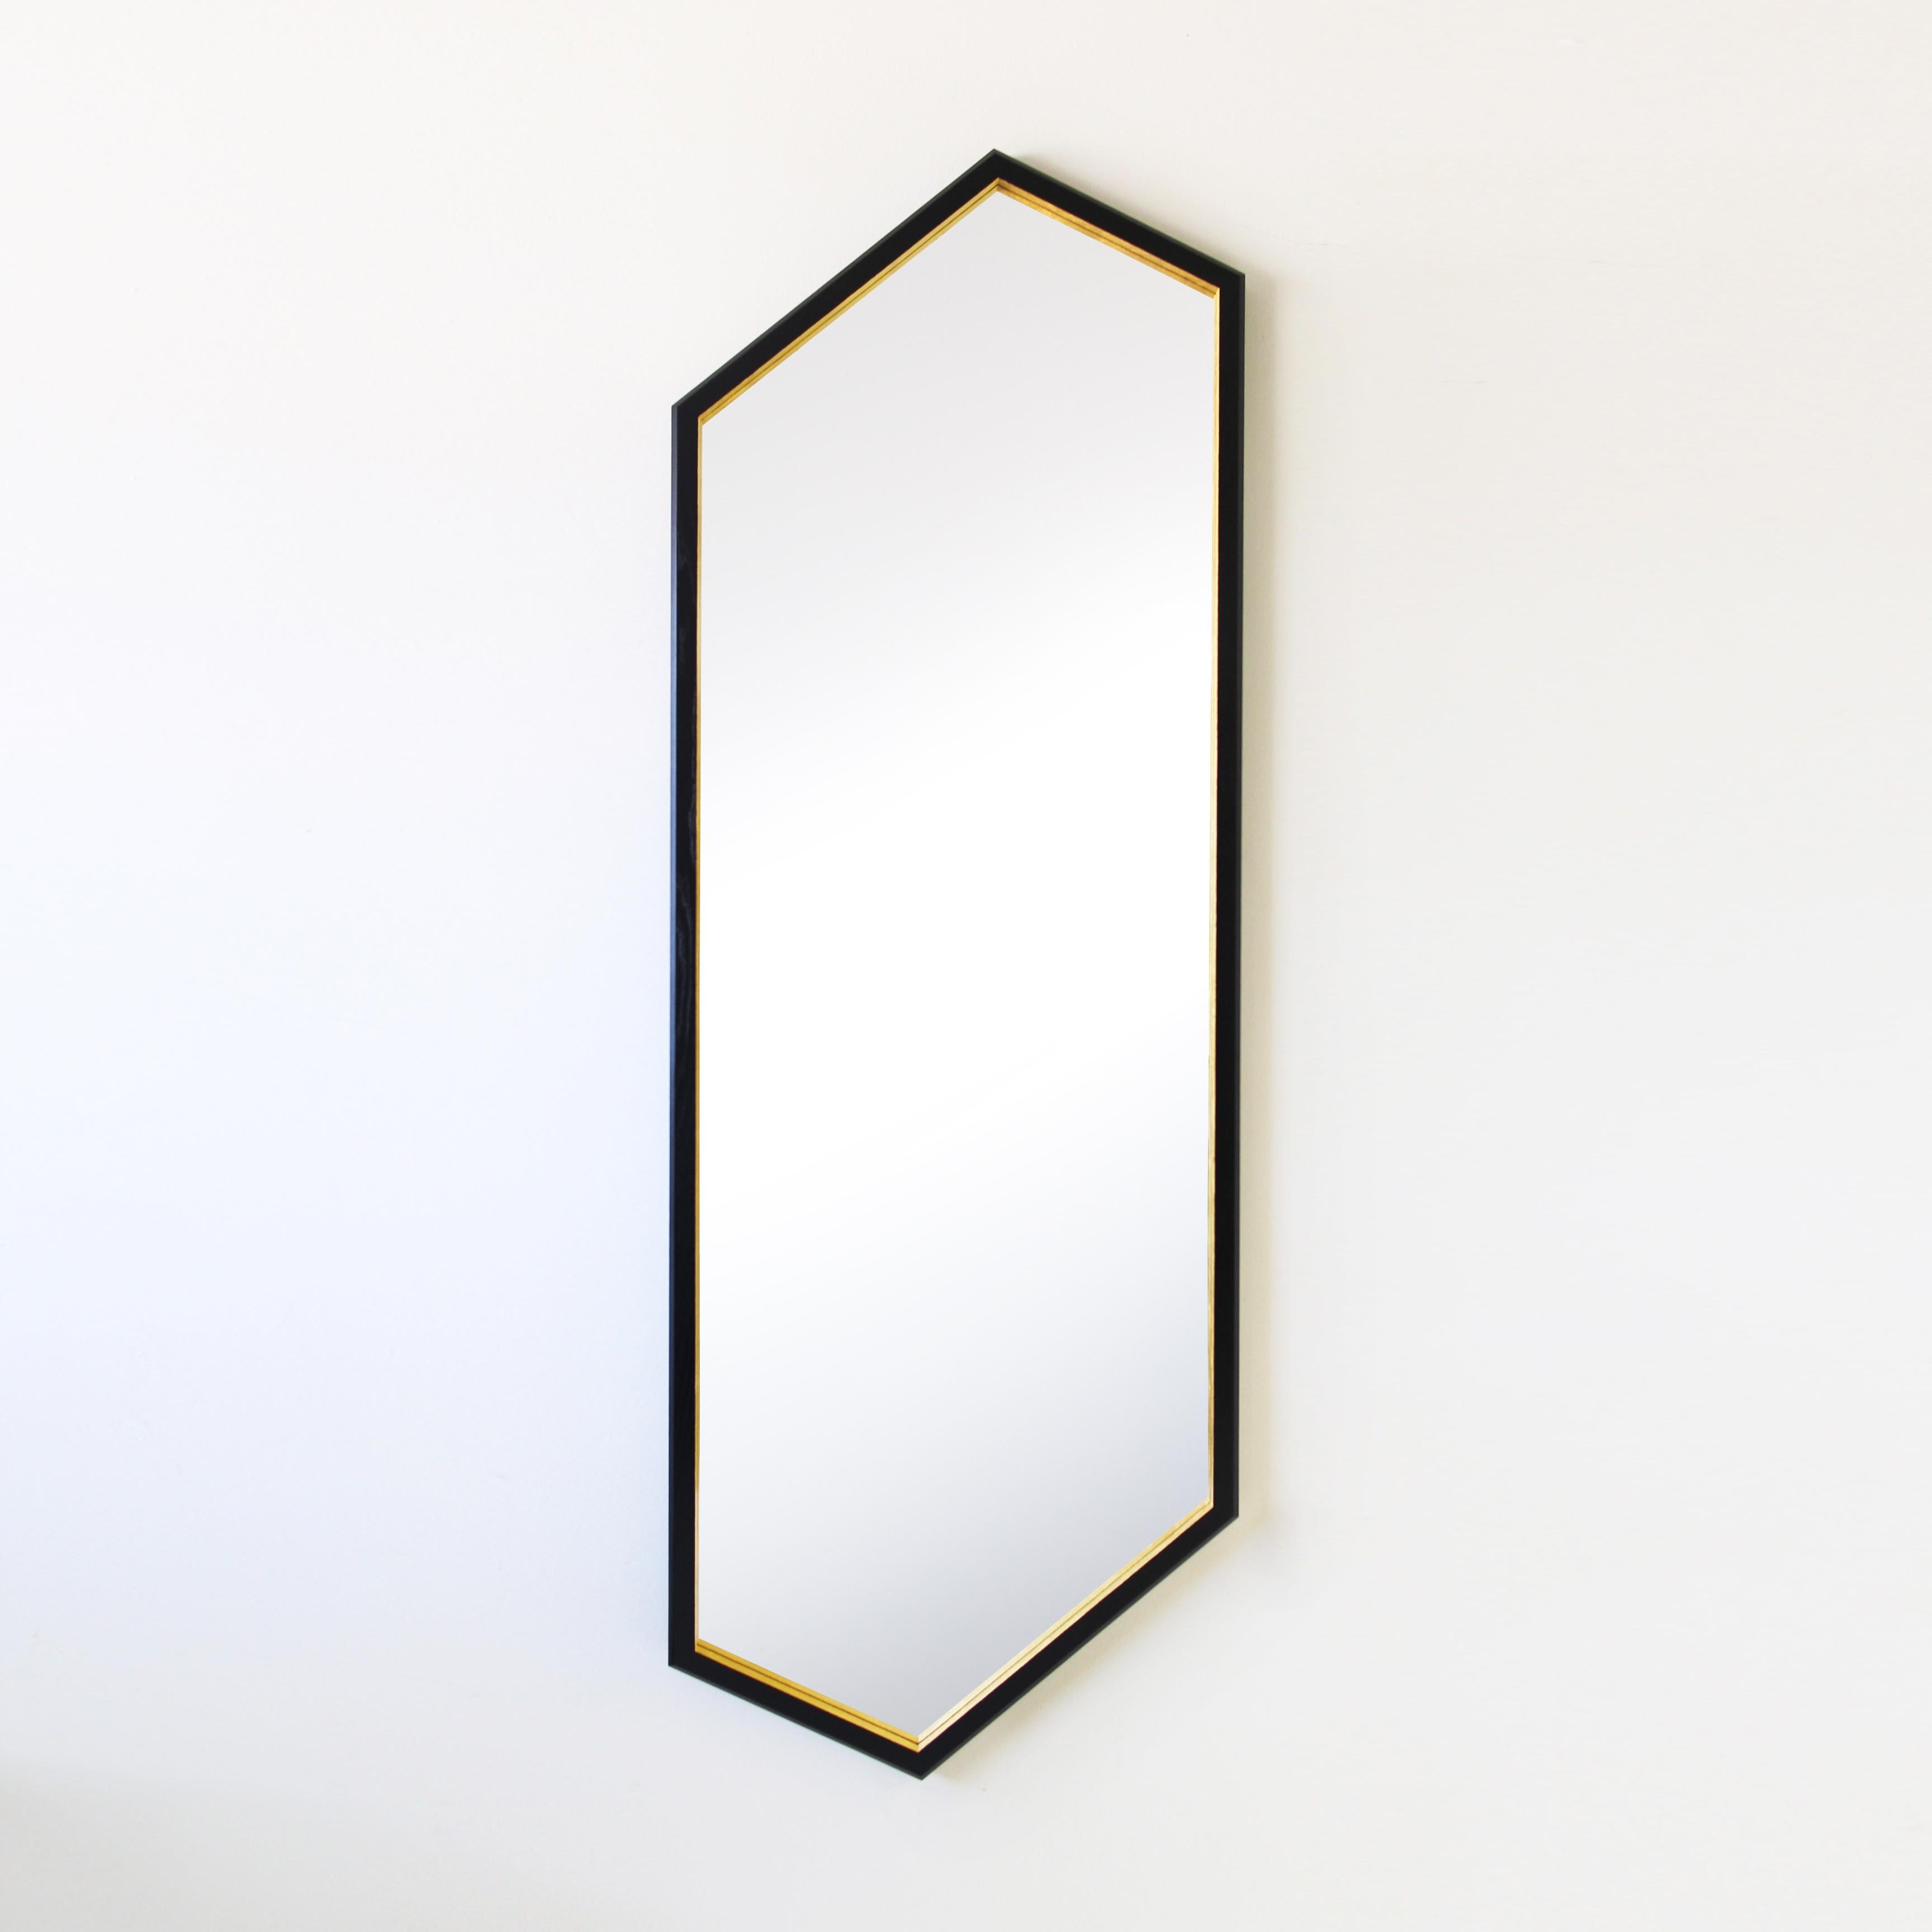 The “Hex Full Length Mirror